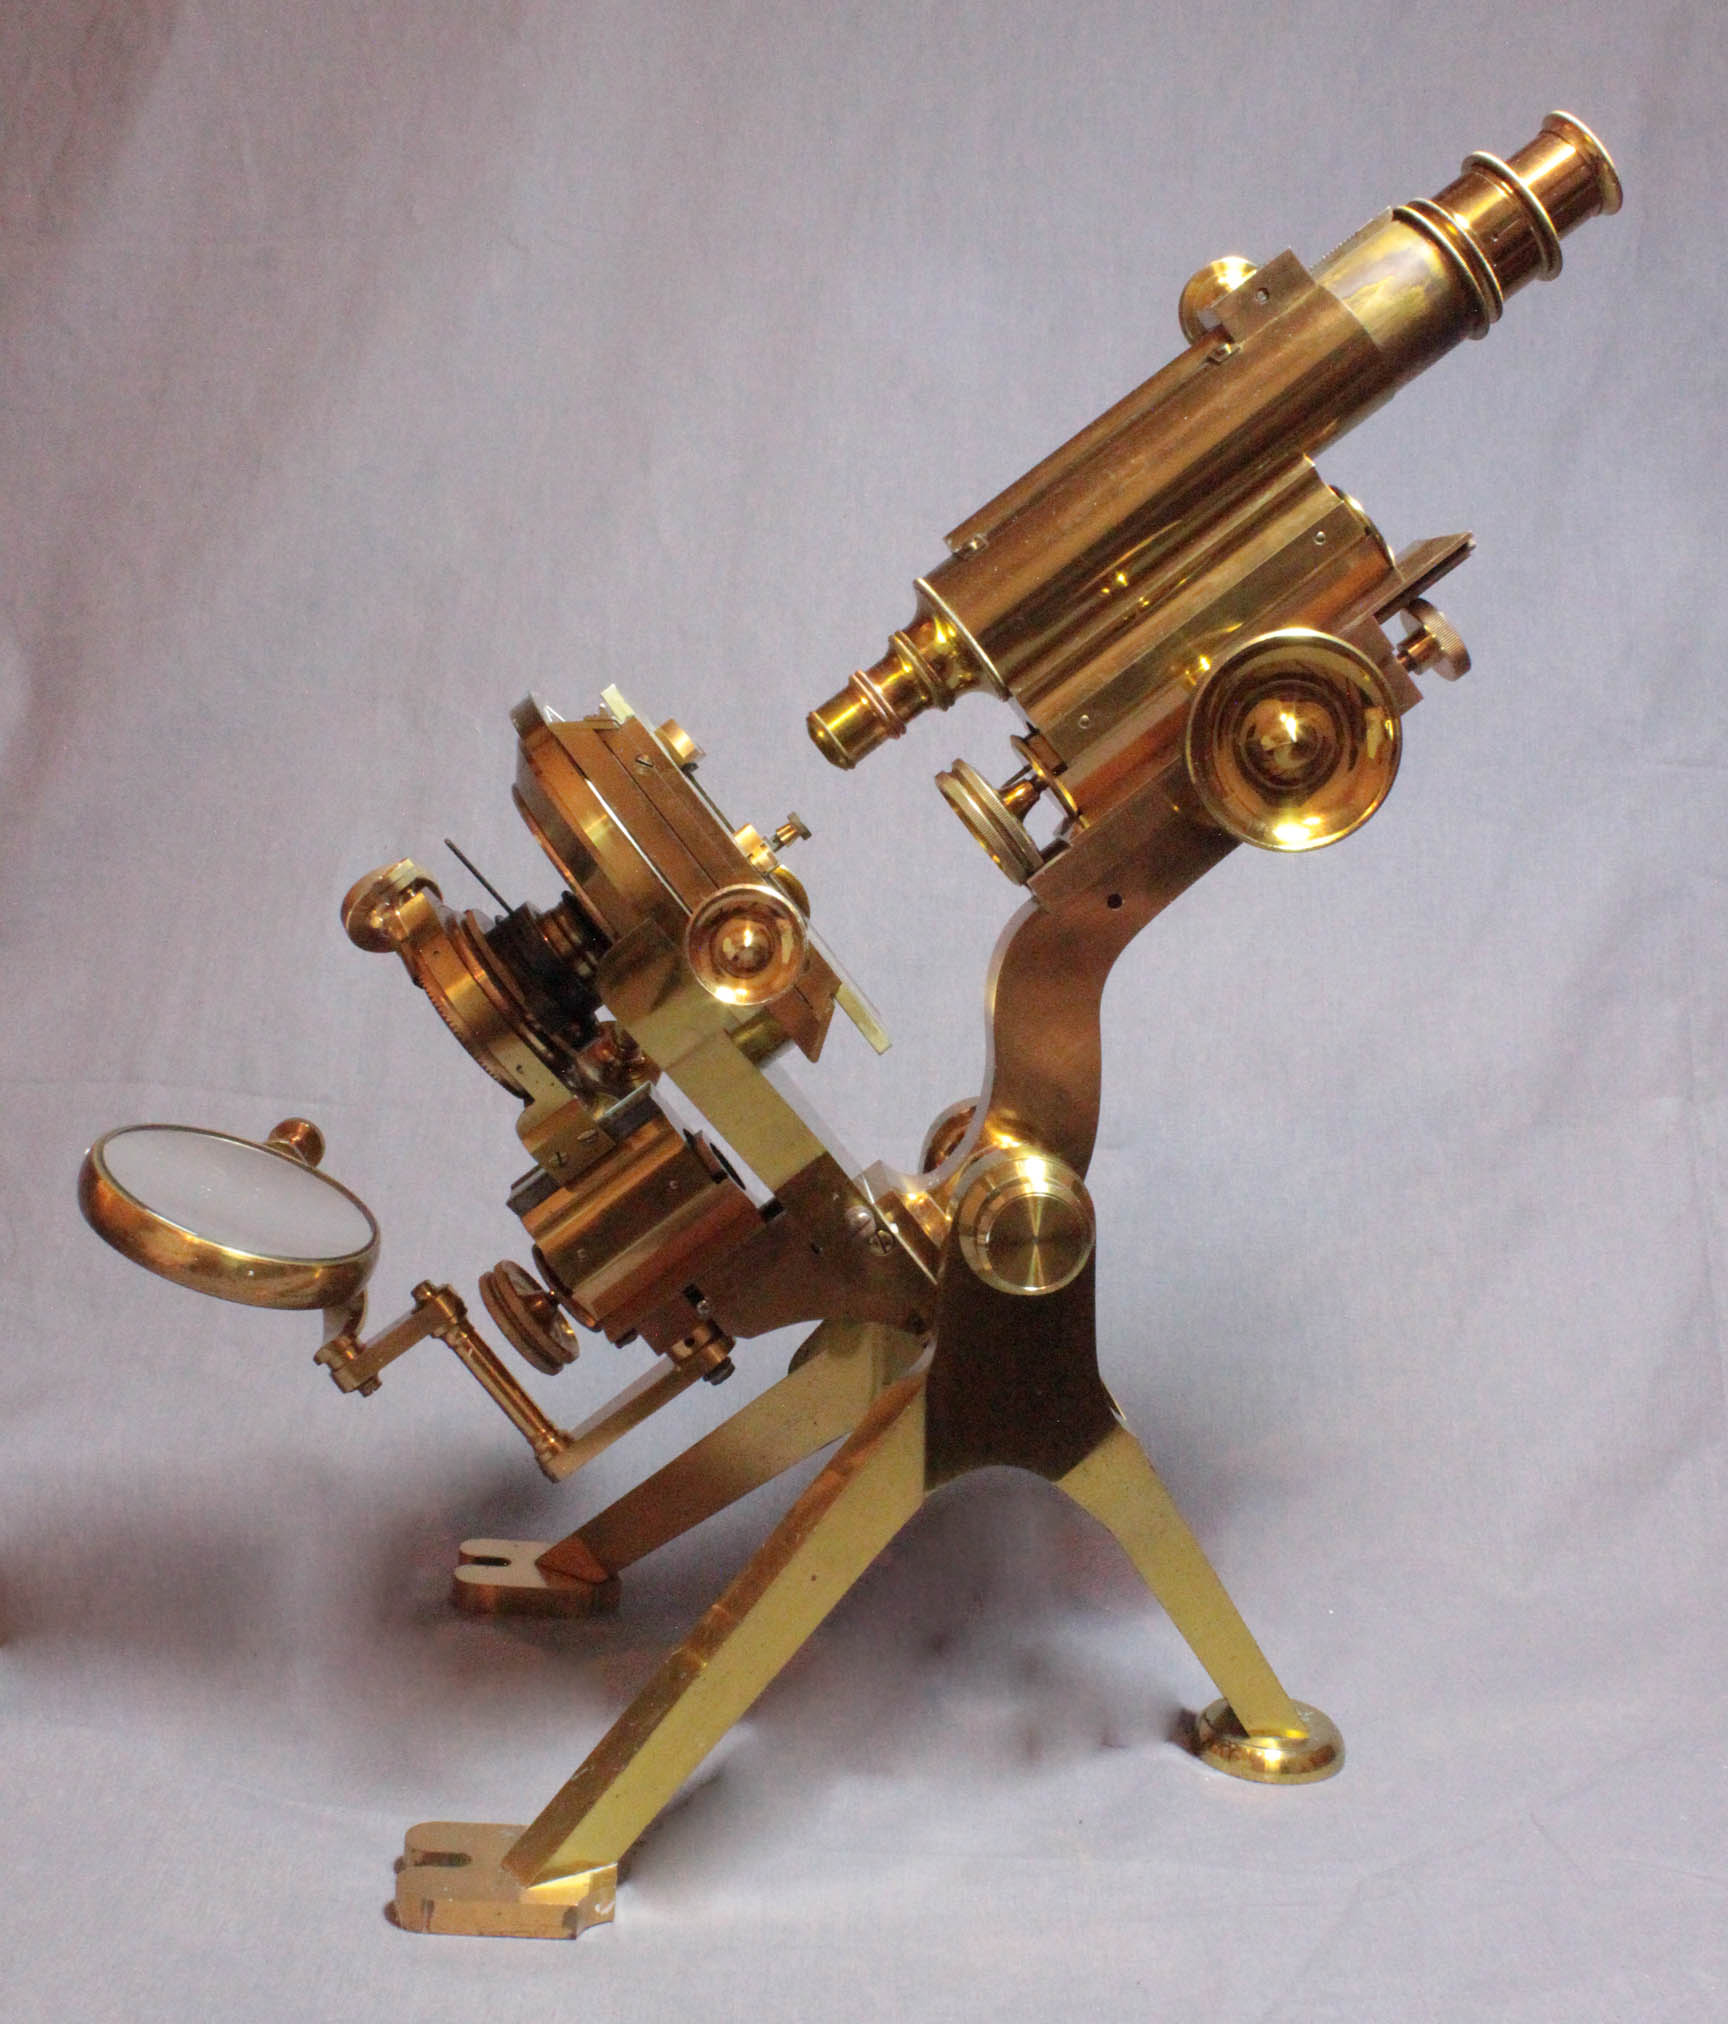 Nelson No 1 microscope